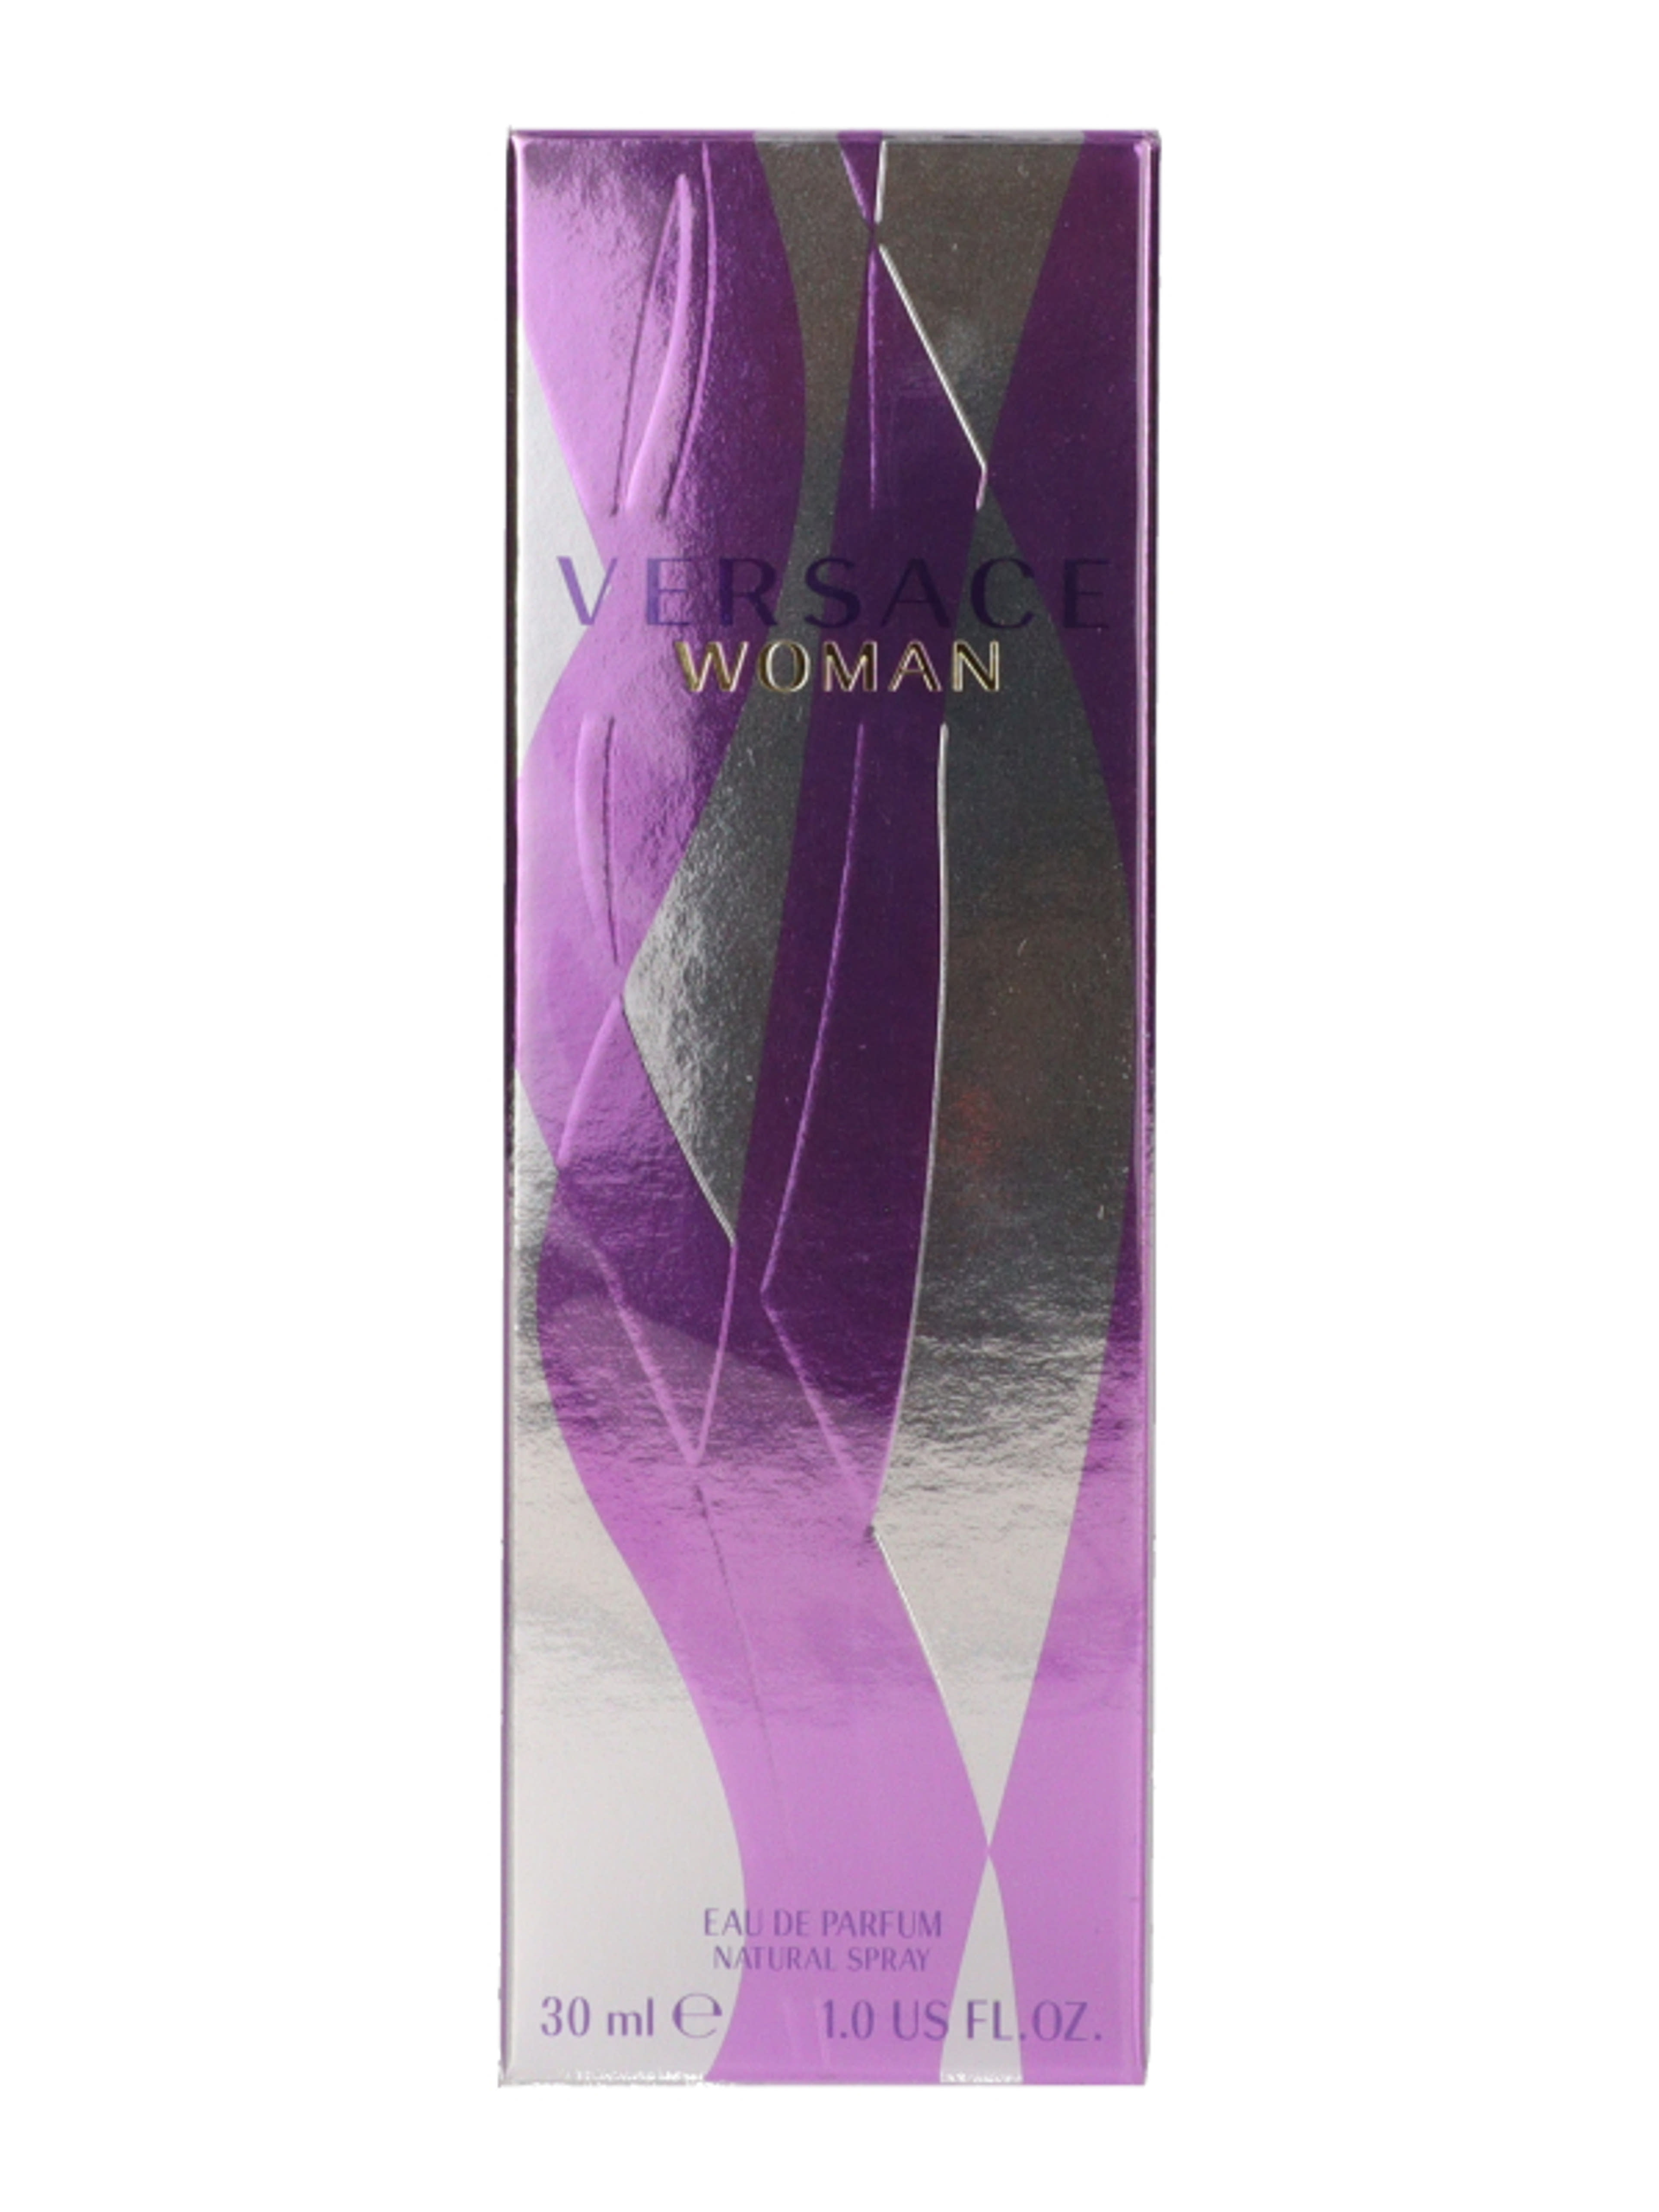 Versace Women Eau de Parfum - 30 ml-2